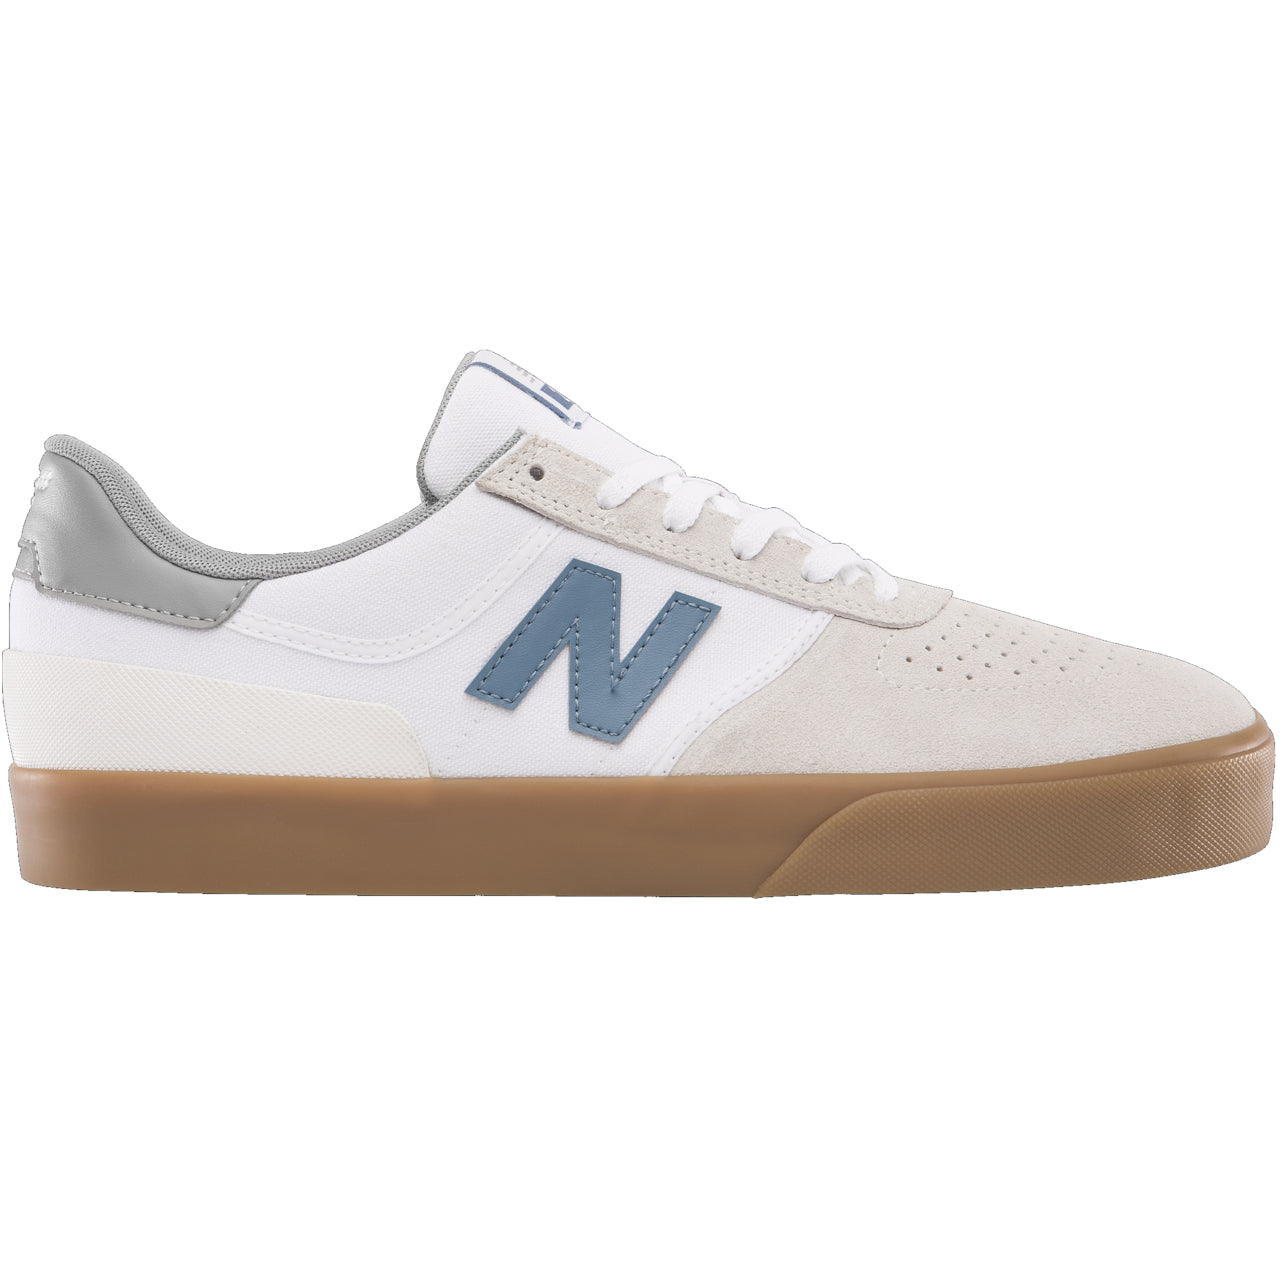 Sea Salt NM272RUP NB Numeric Skateboarding Shoe